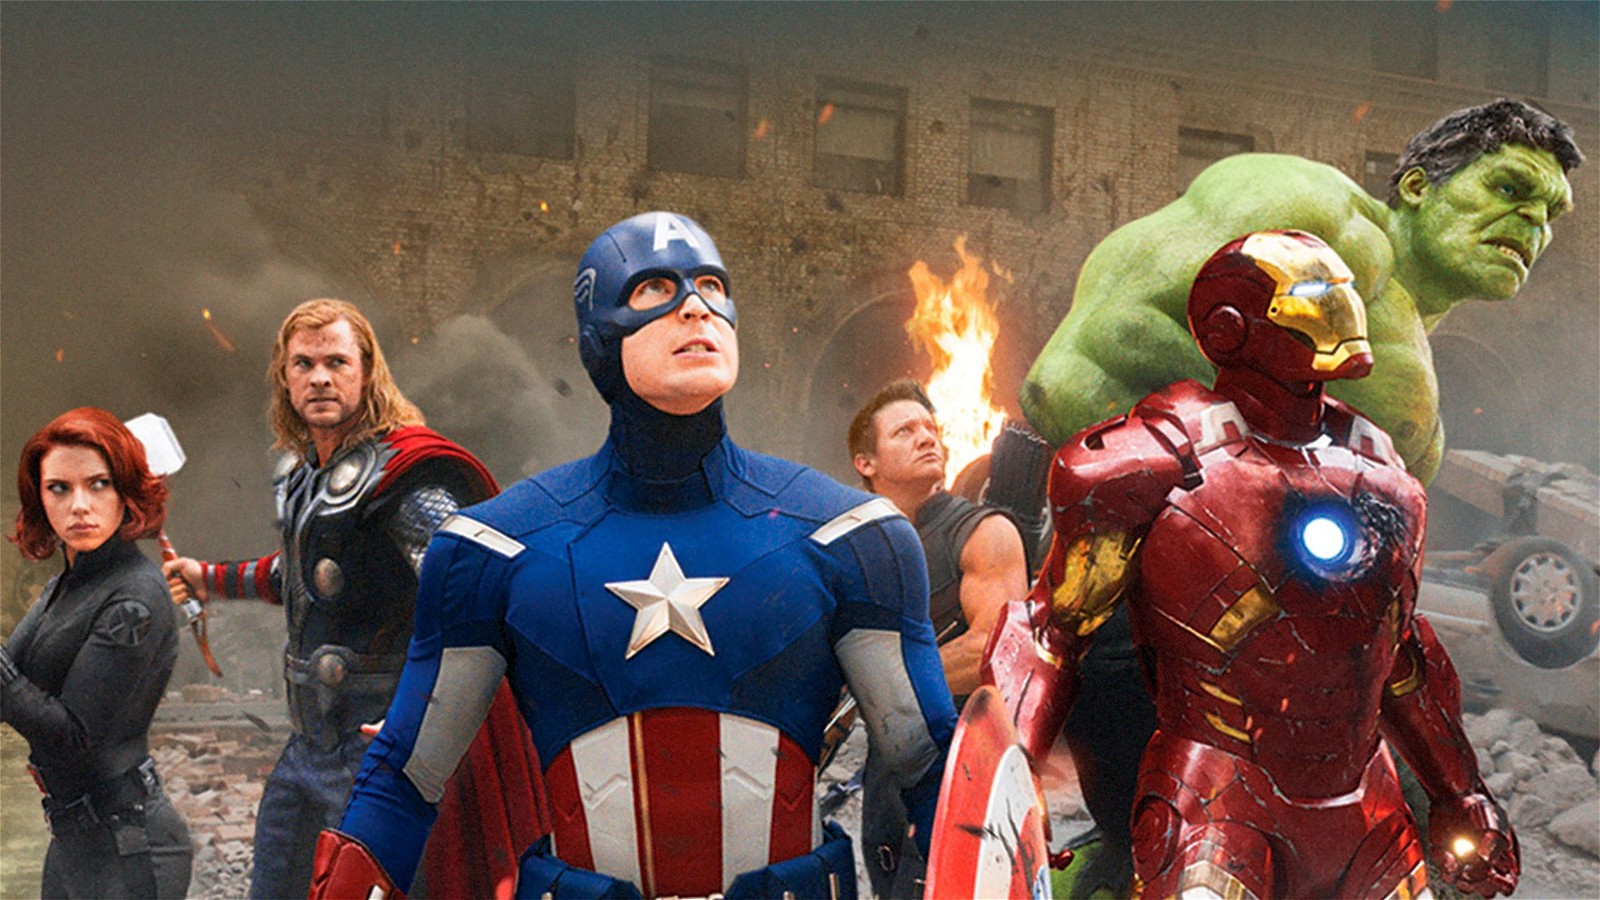 The Avengers (2012) [Credit: Marvel Studios]